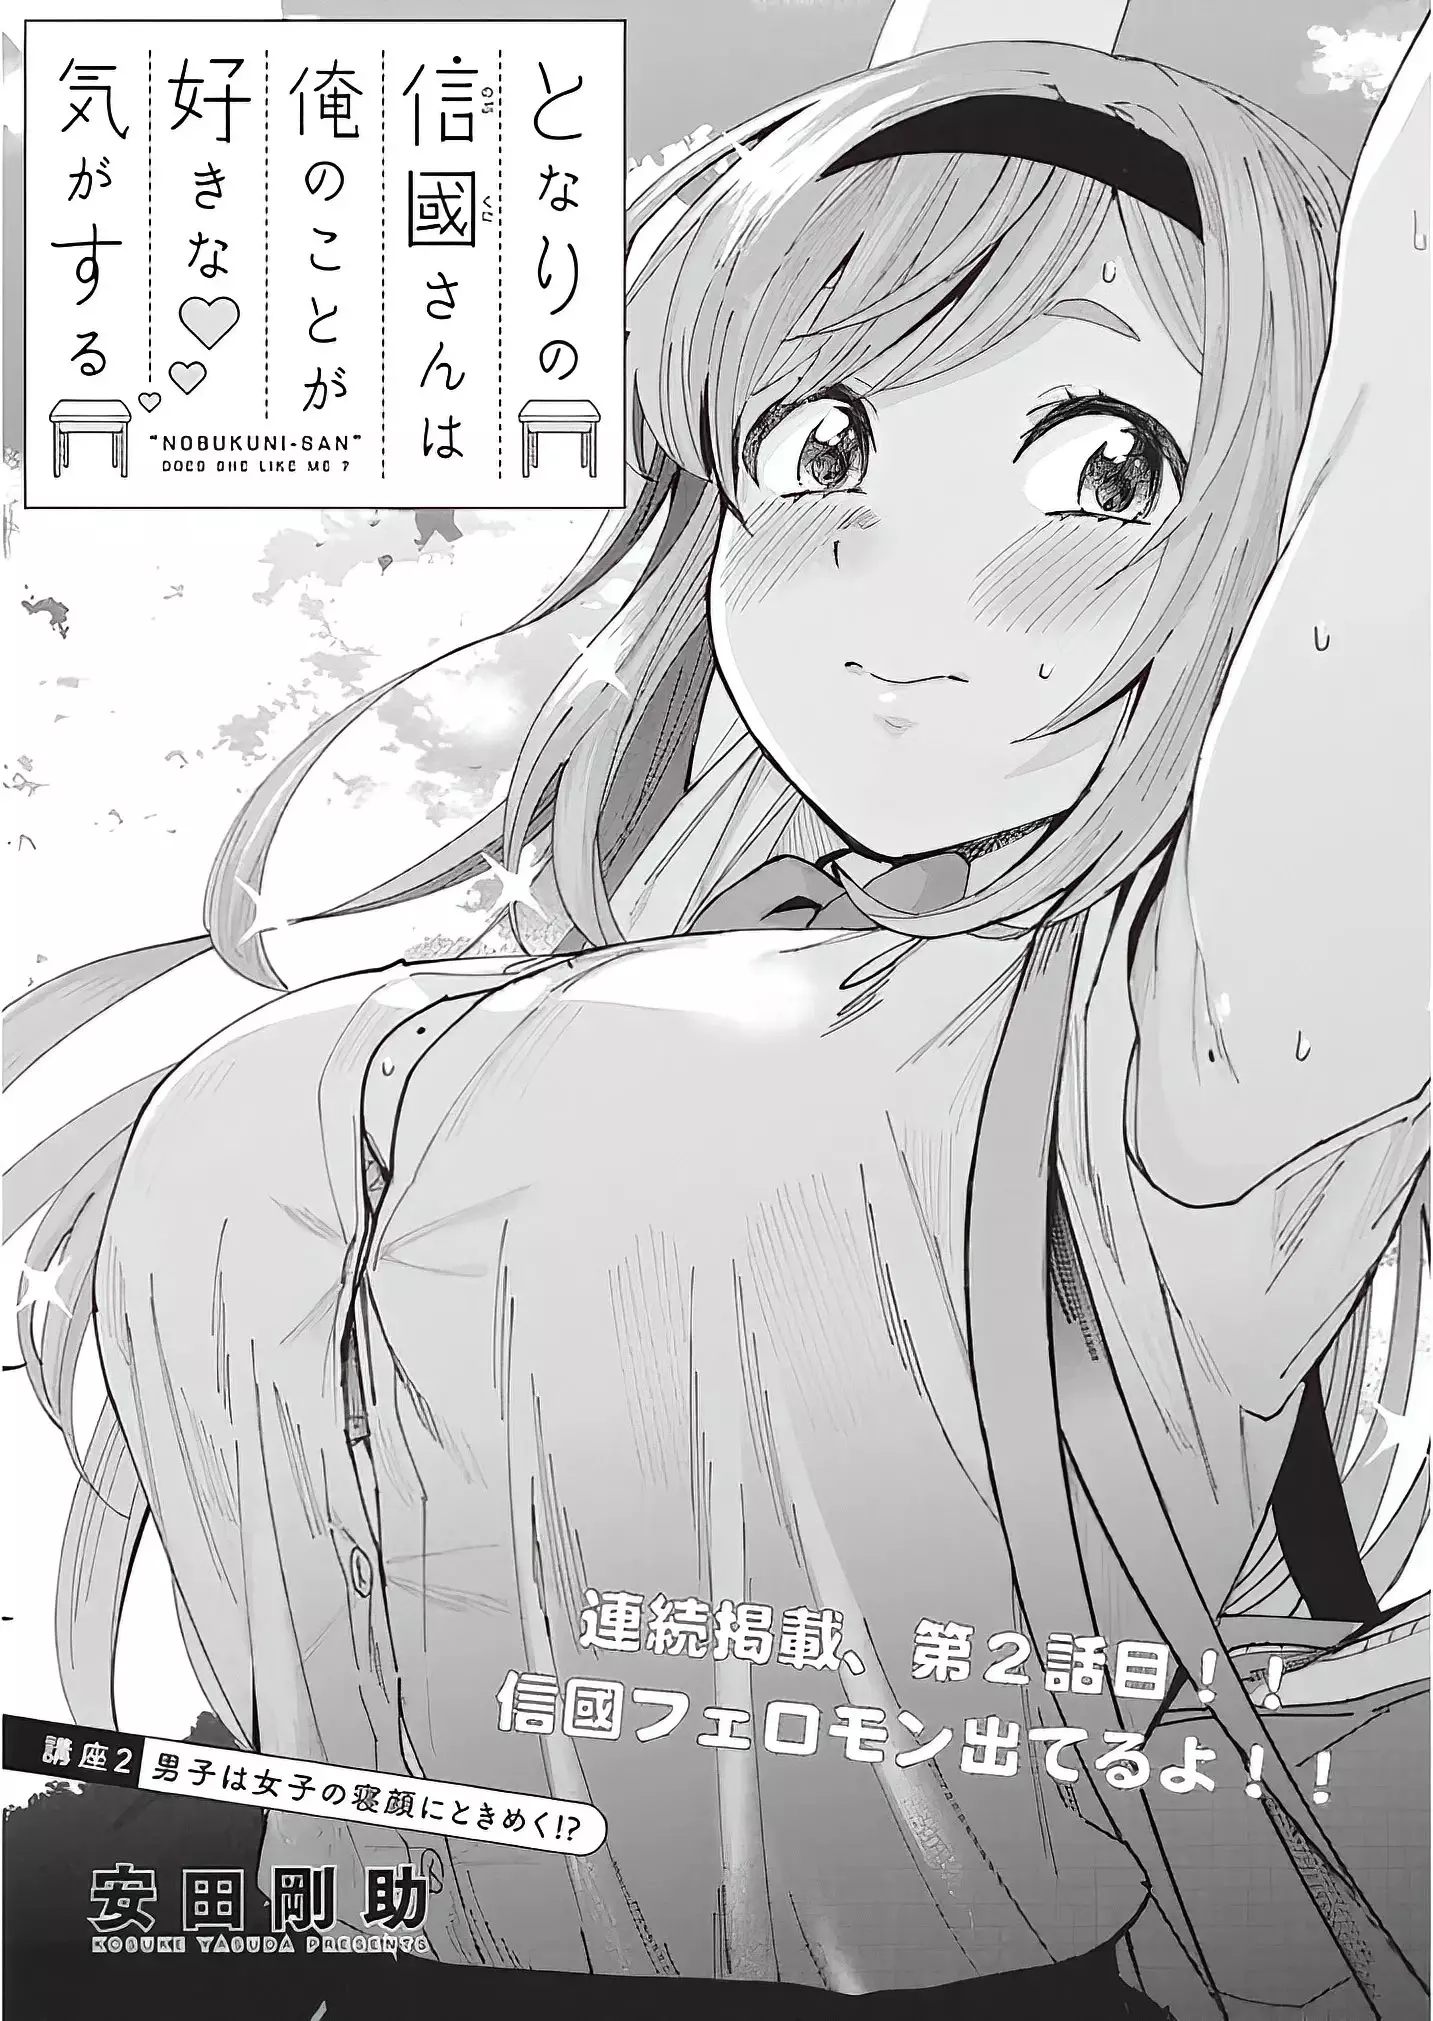 "nobukuni-San" Does She Like Me? - 2 page 2